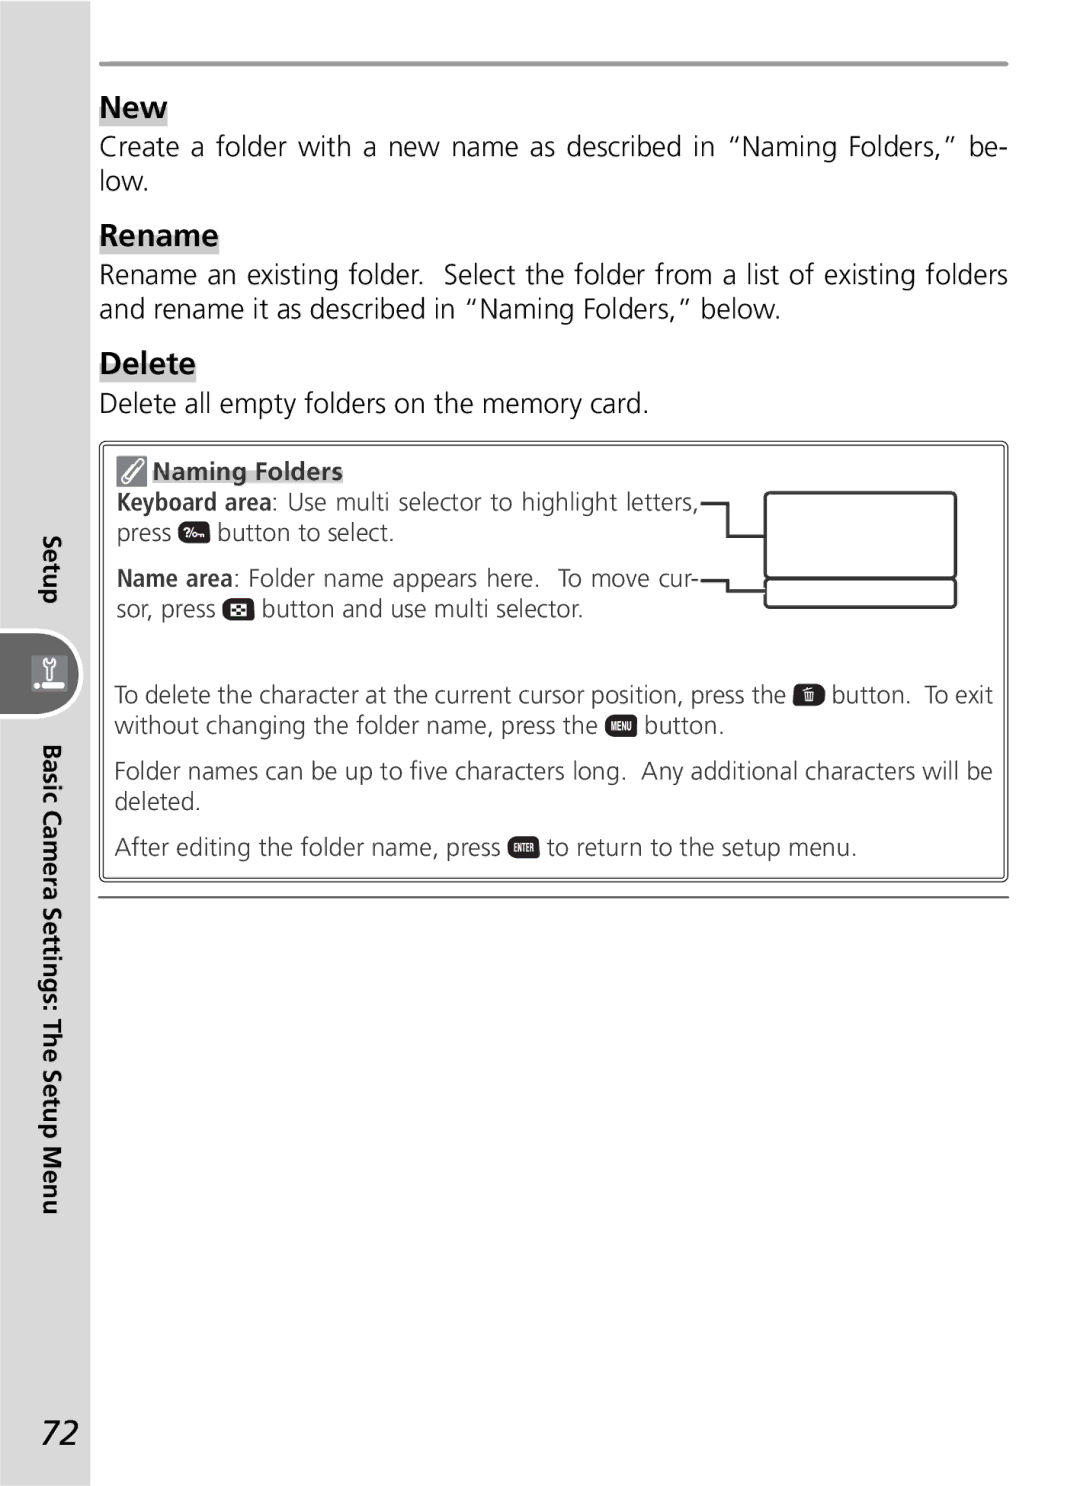 Nikon D50 manual New, Rename, Delete all empty folders on the memory card, Naming Folders 